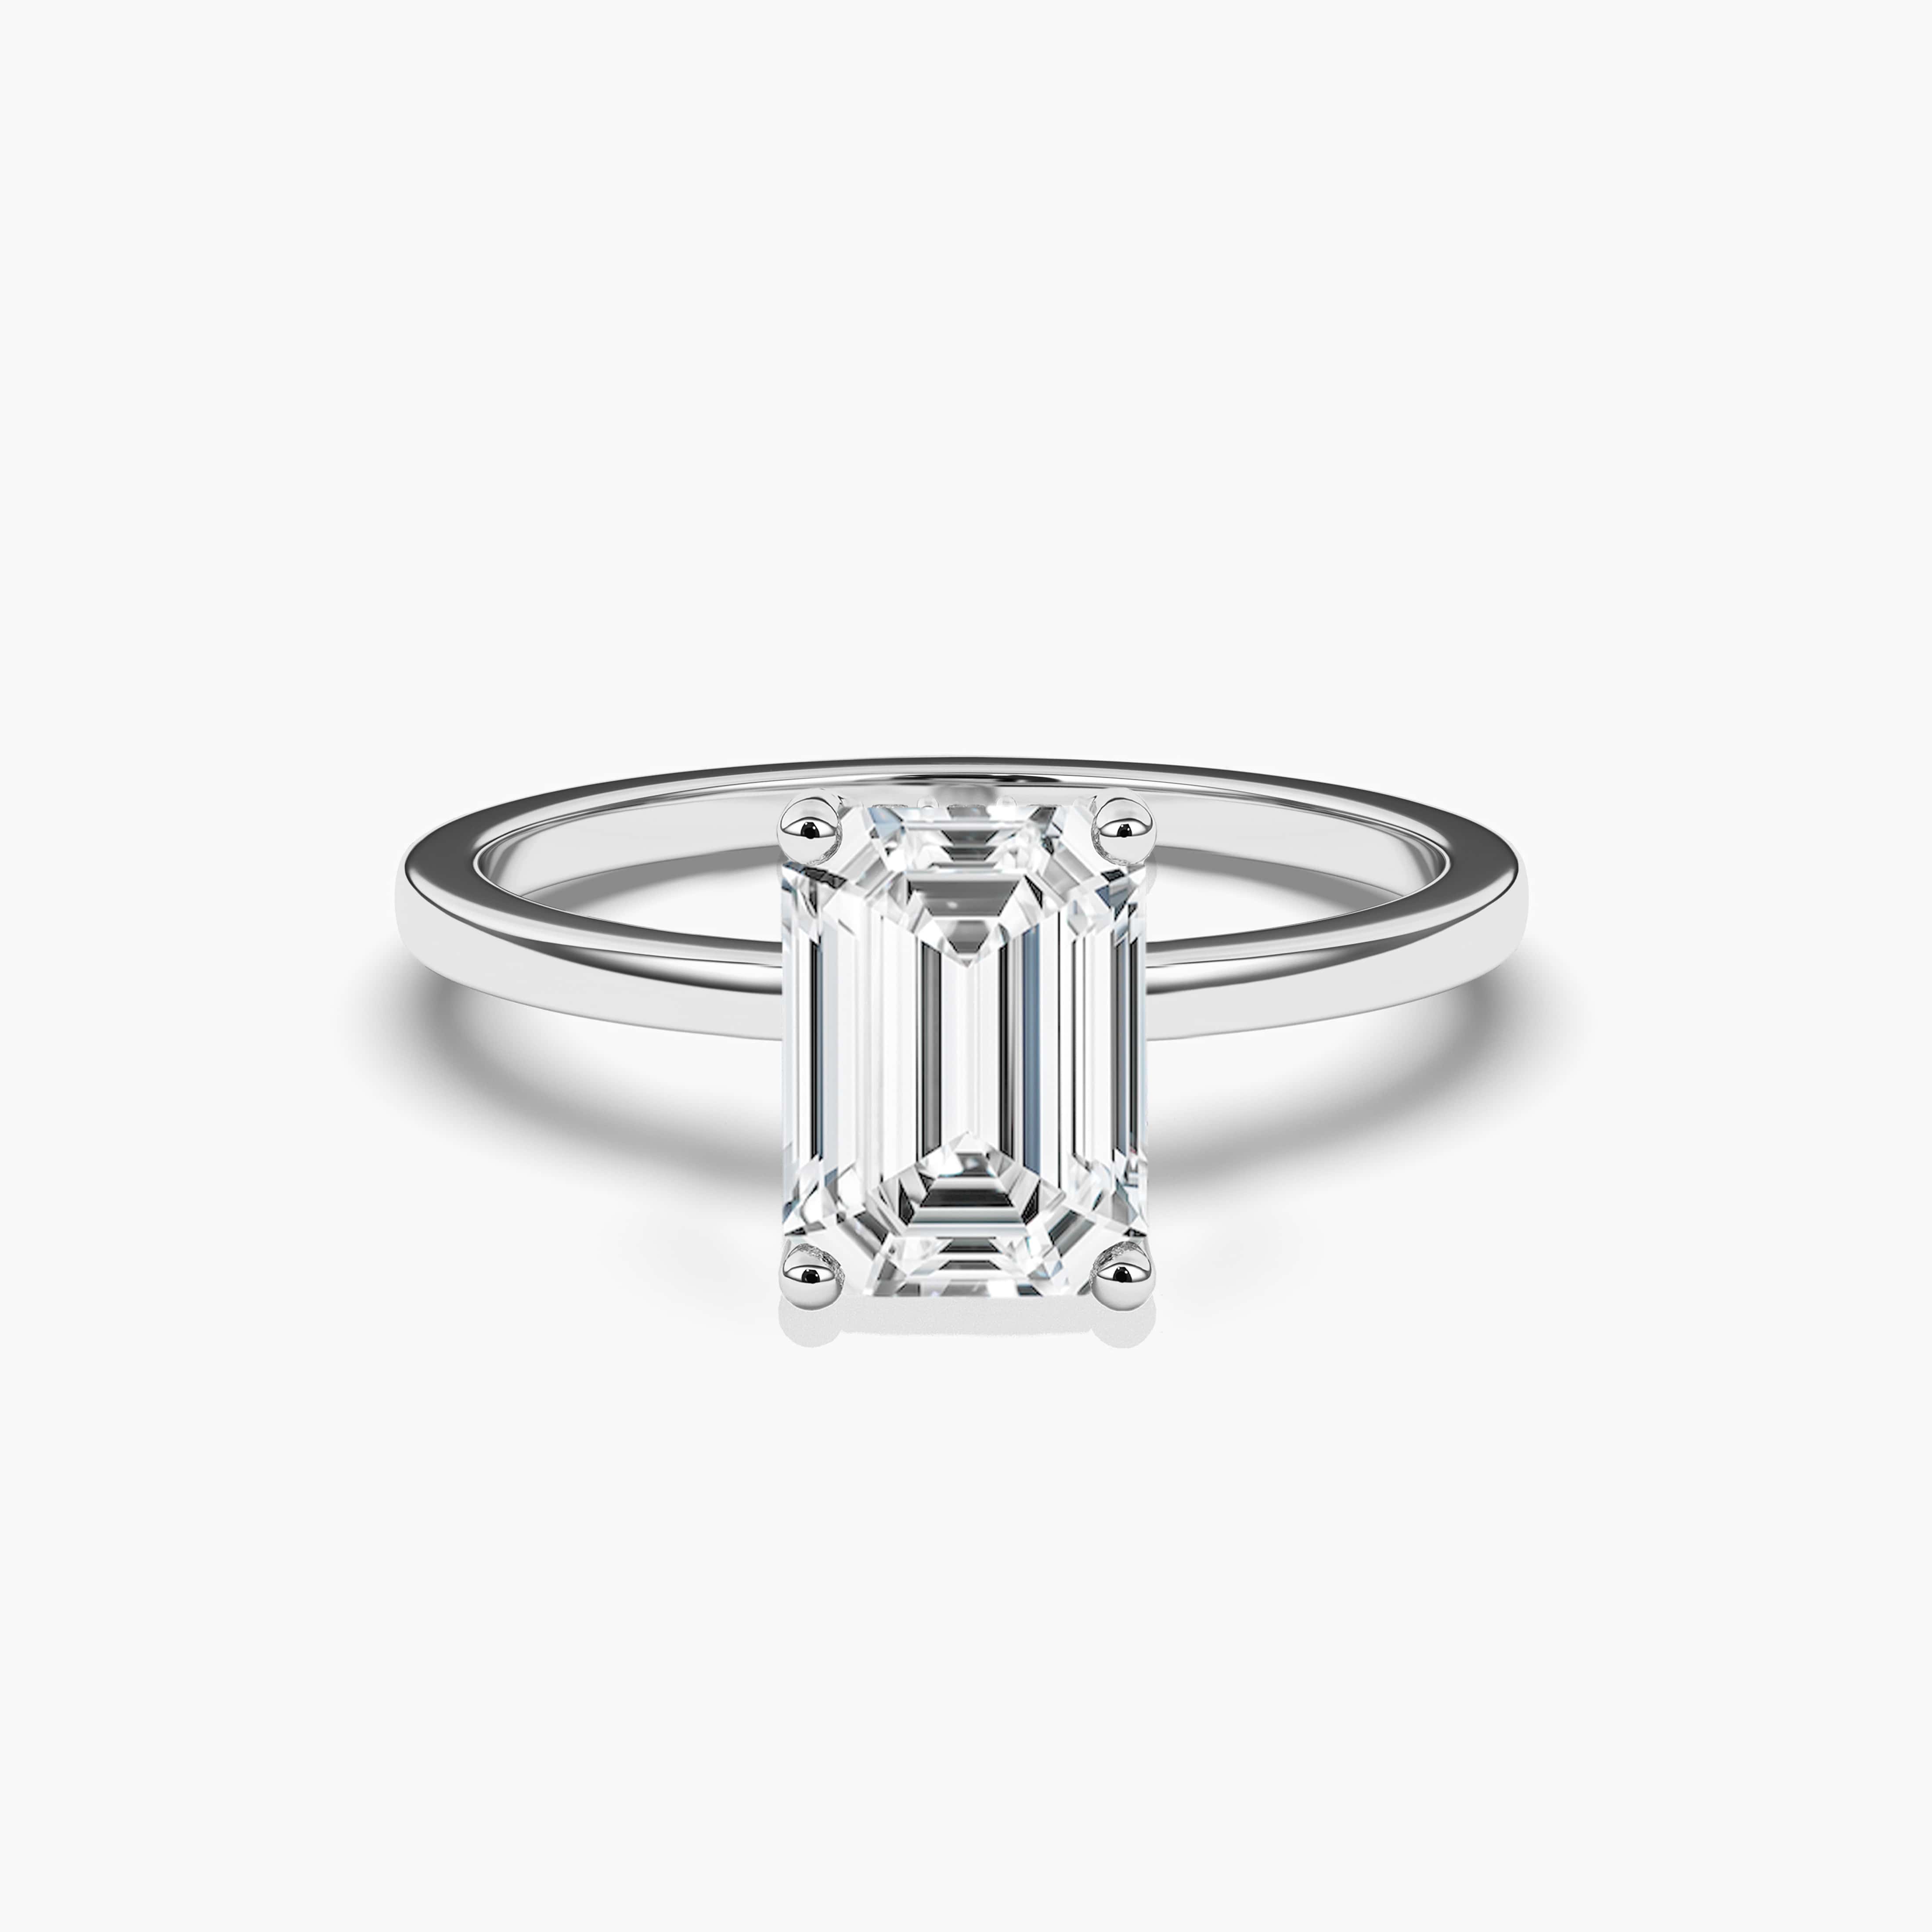 2.00carat white gold emerald engagement ring